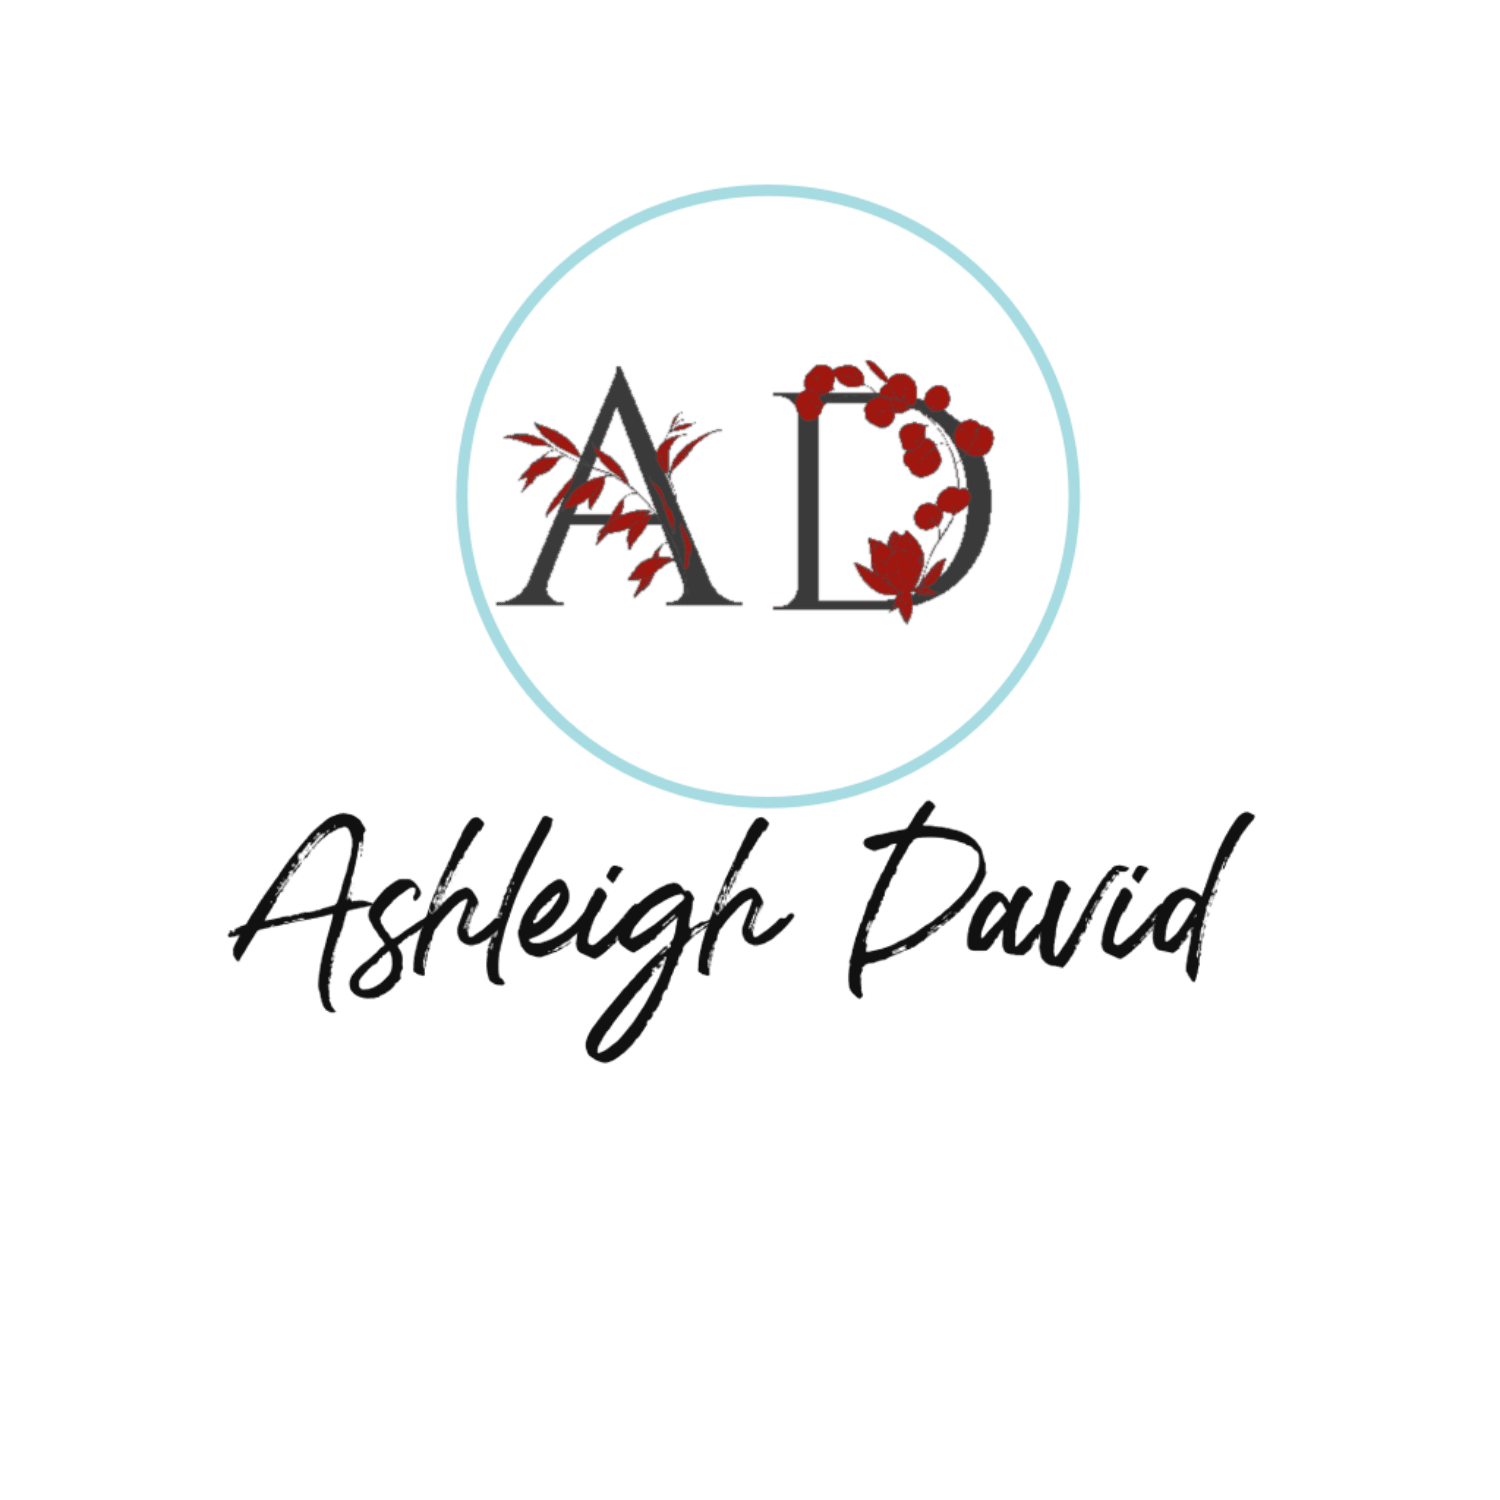 Ashleigh David